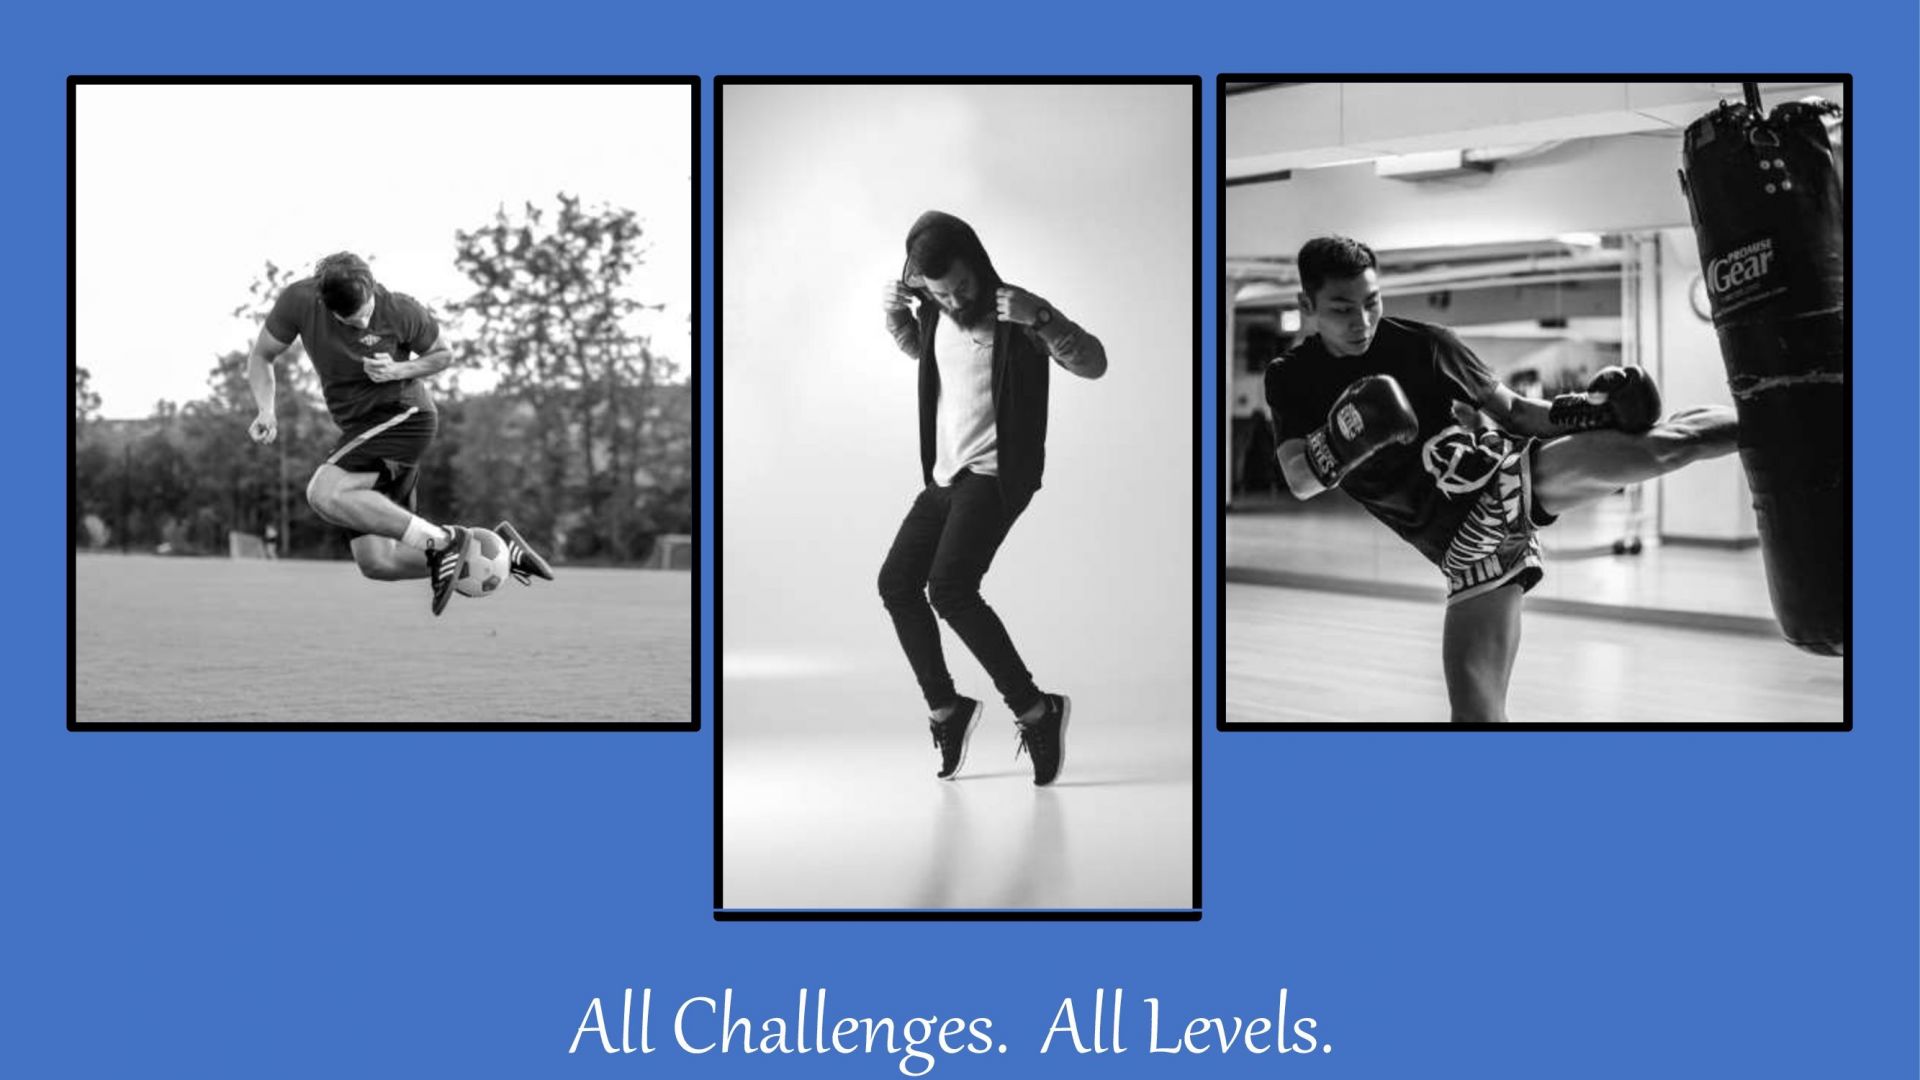 Flexibility for all levels. kickboxer kicking bag, break dancer on toes & soccer player in air kicking ball